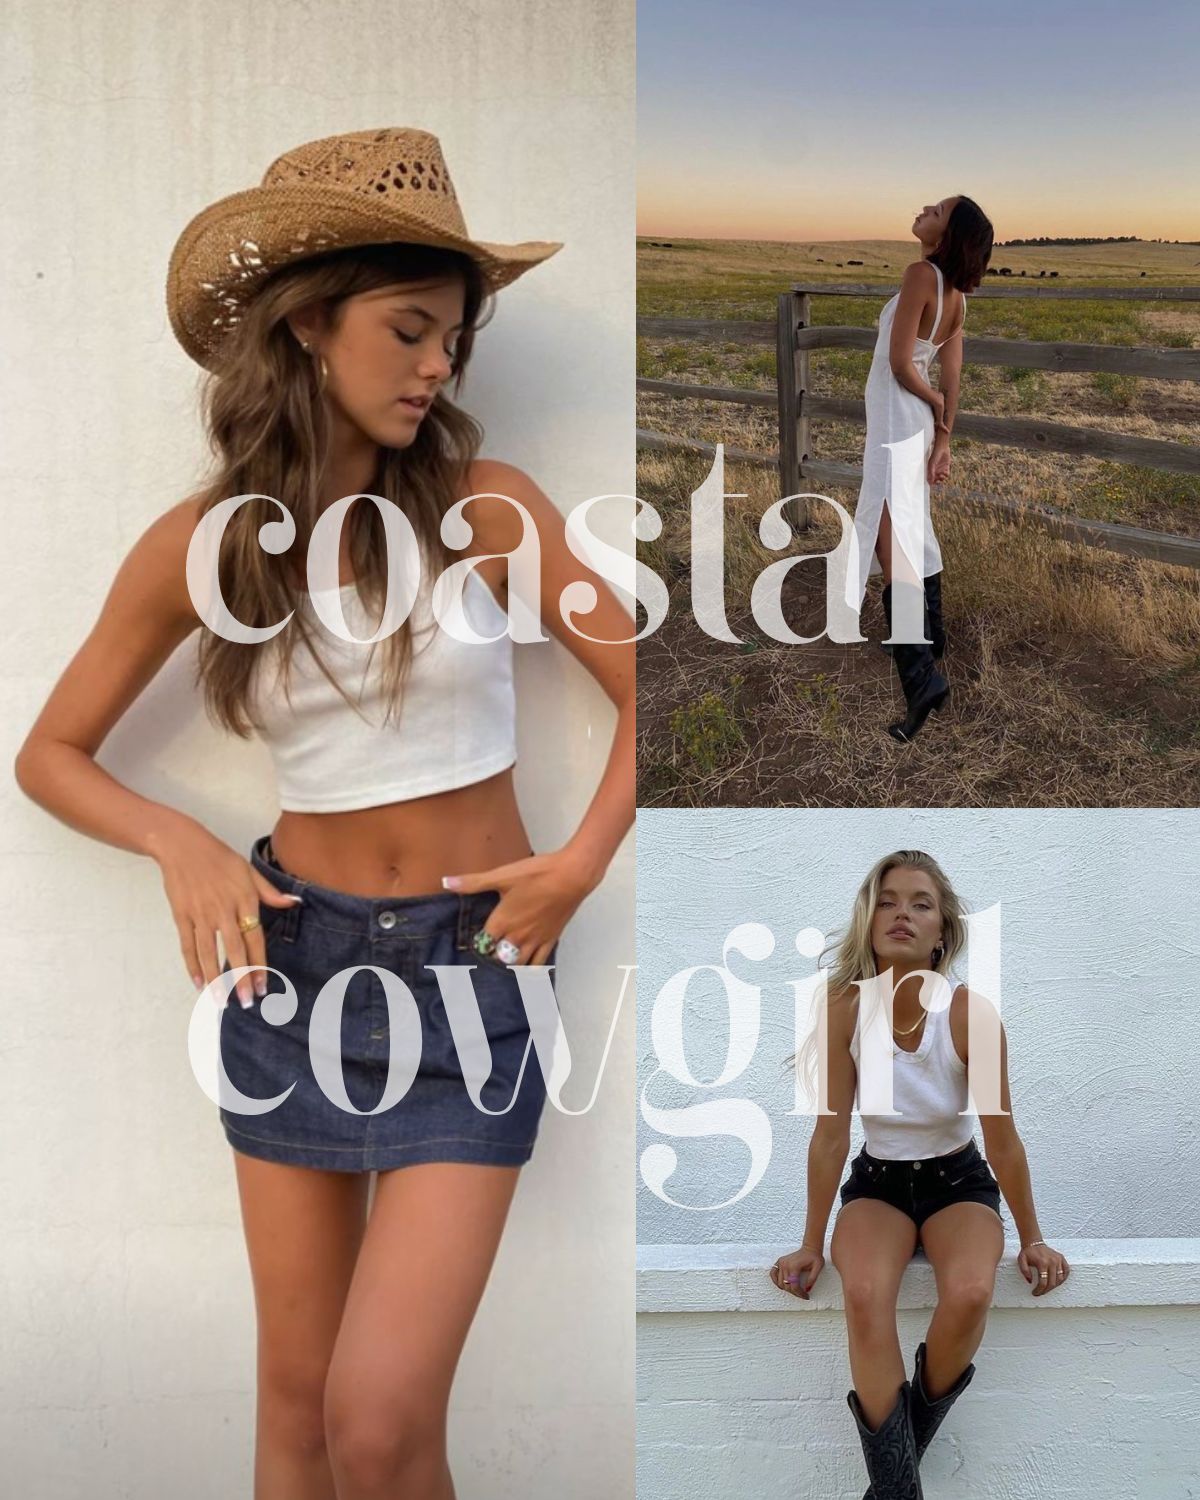 Coastal cowgirl aesthetic ideas